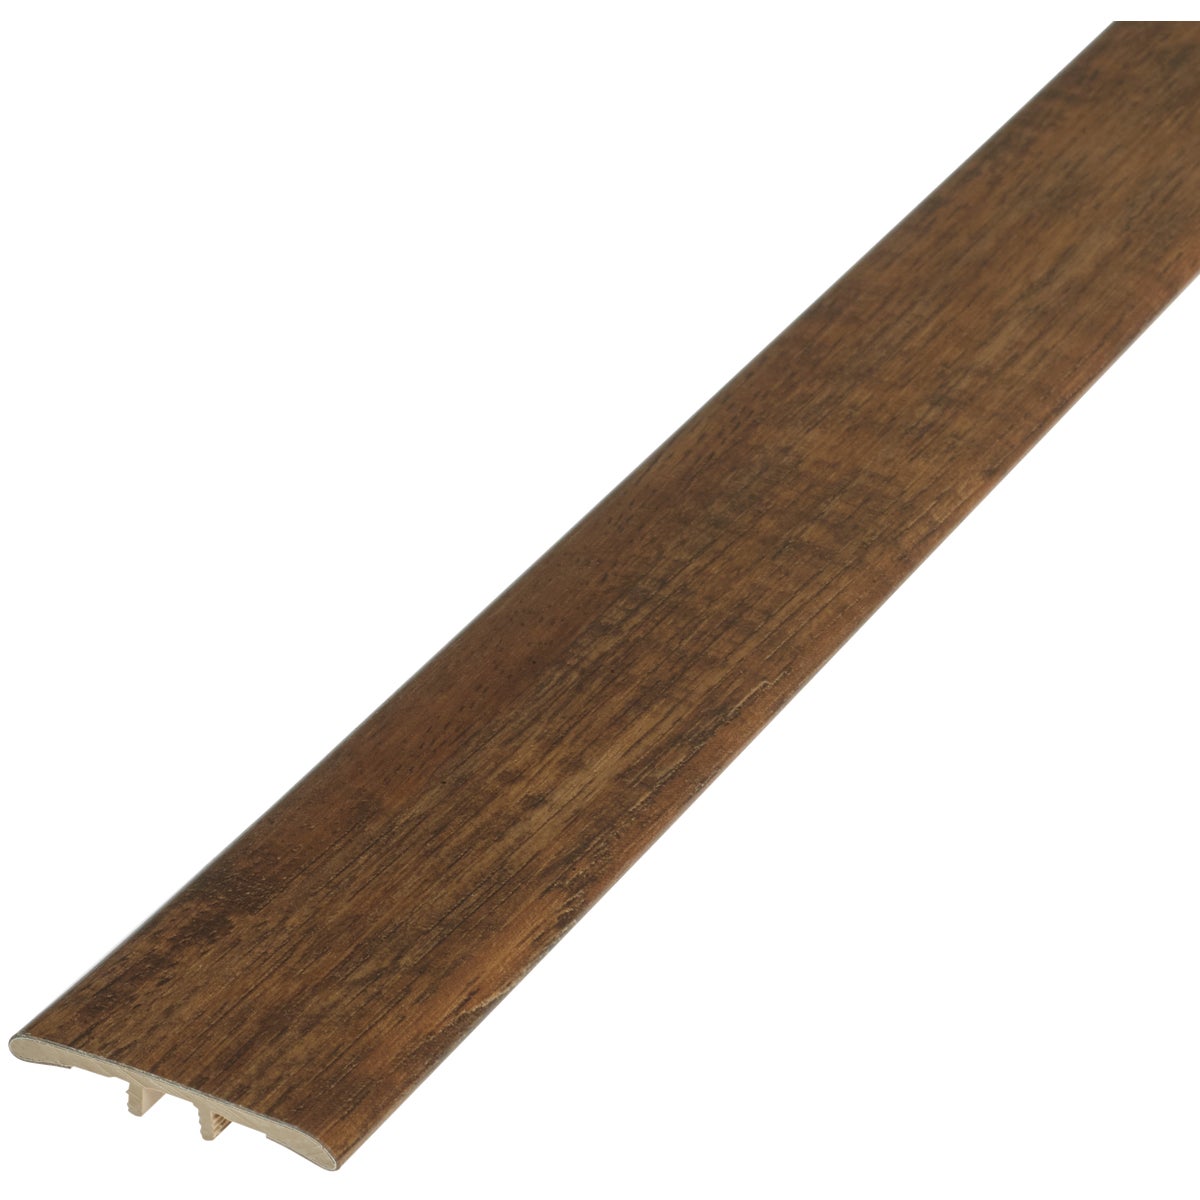 Shaw Endura Cinnamon Walnut 1-3/4 In. W x 72 In. L T Mold Vinyl Floor Plank Trim